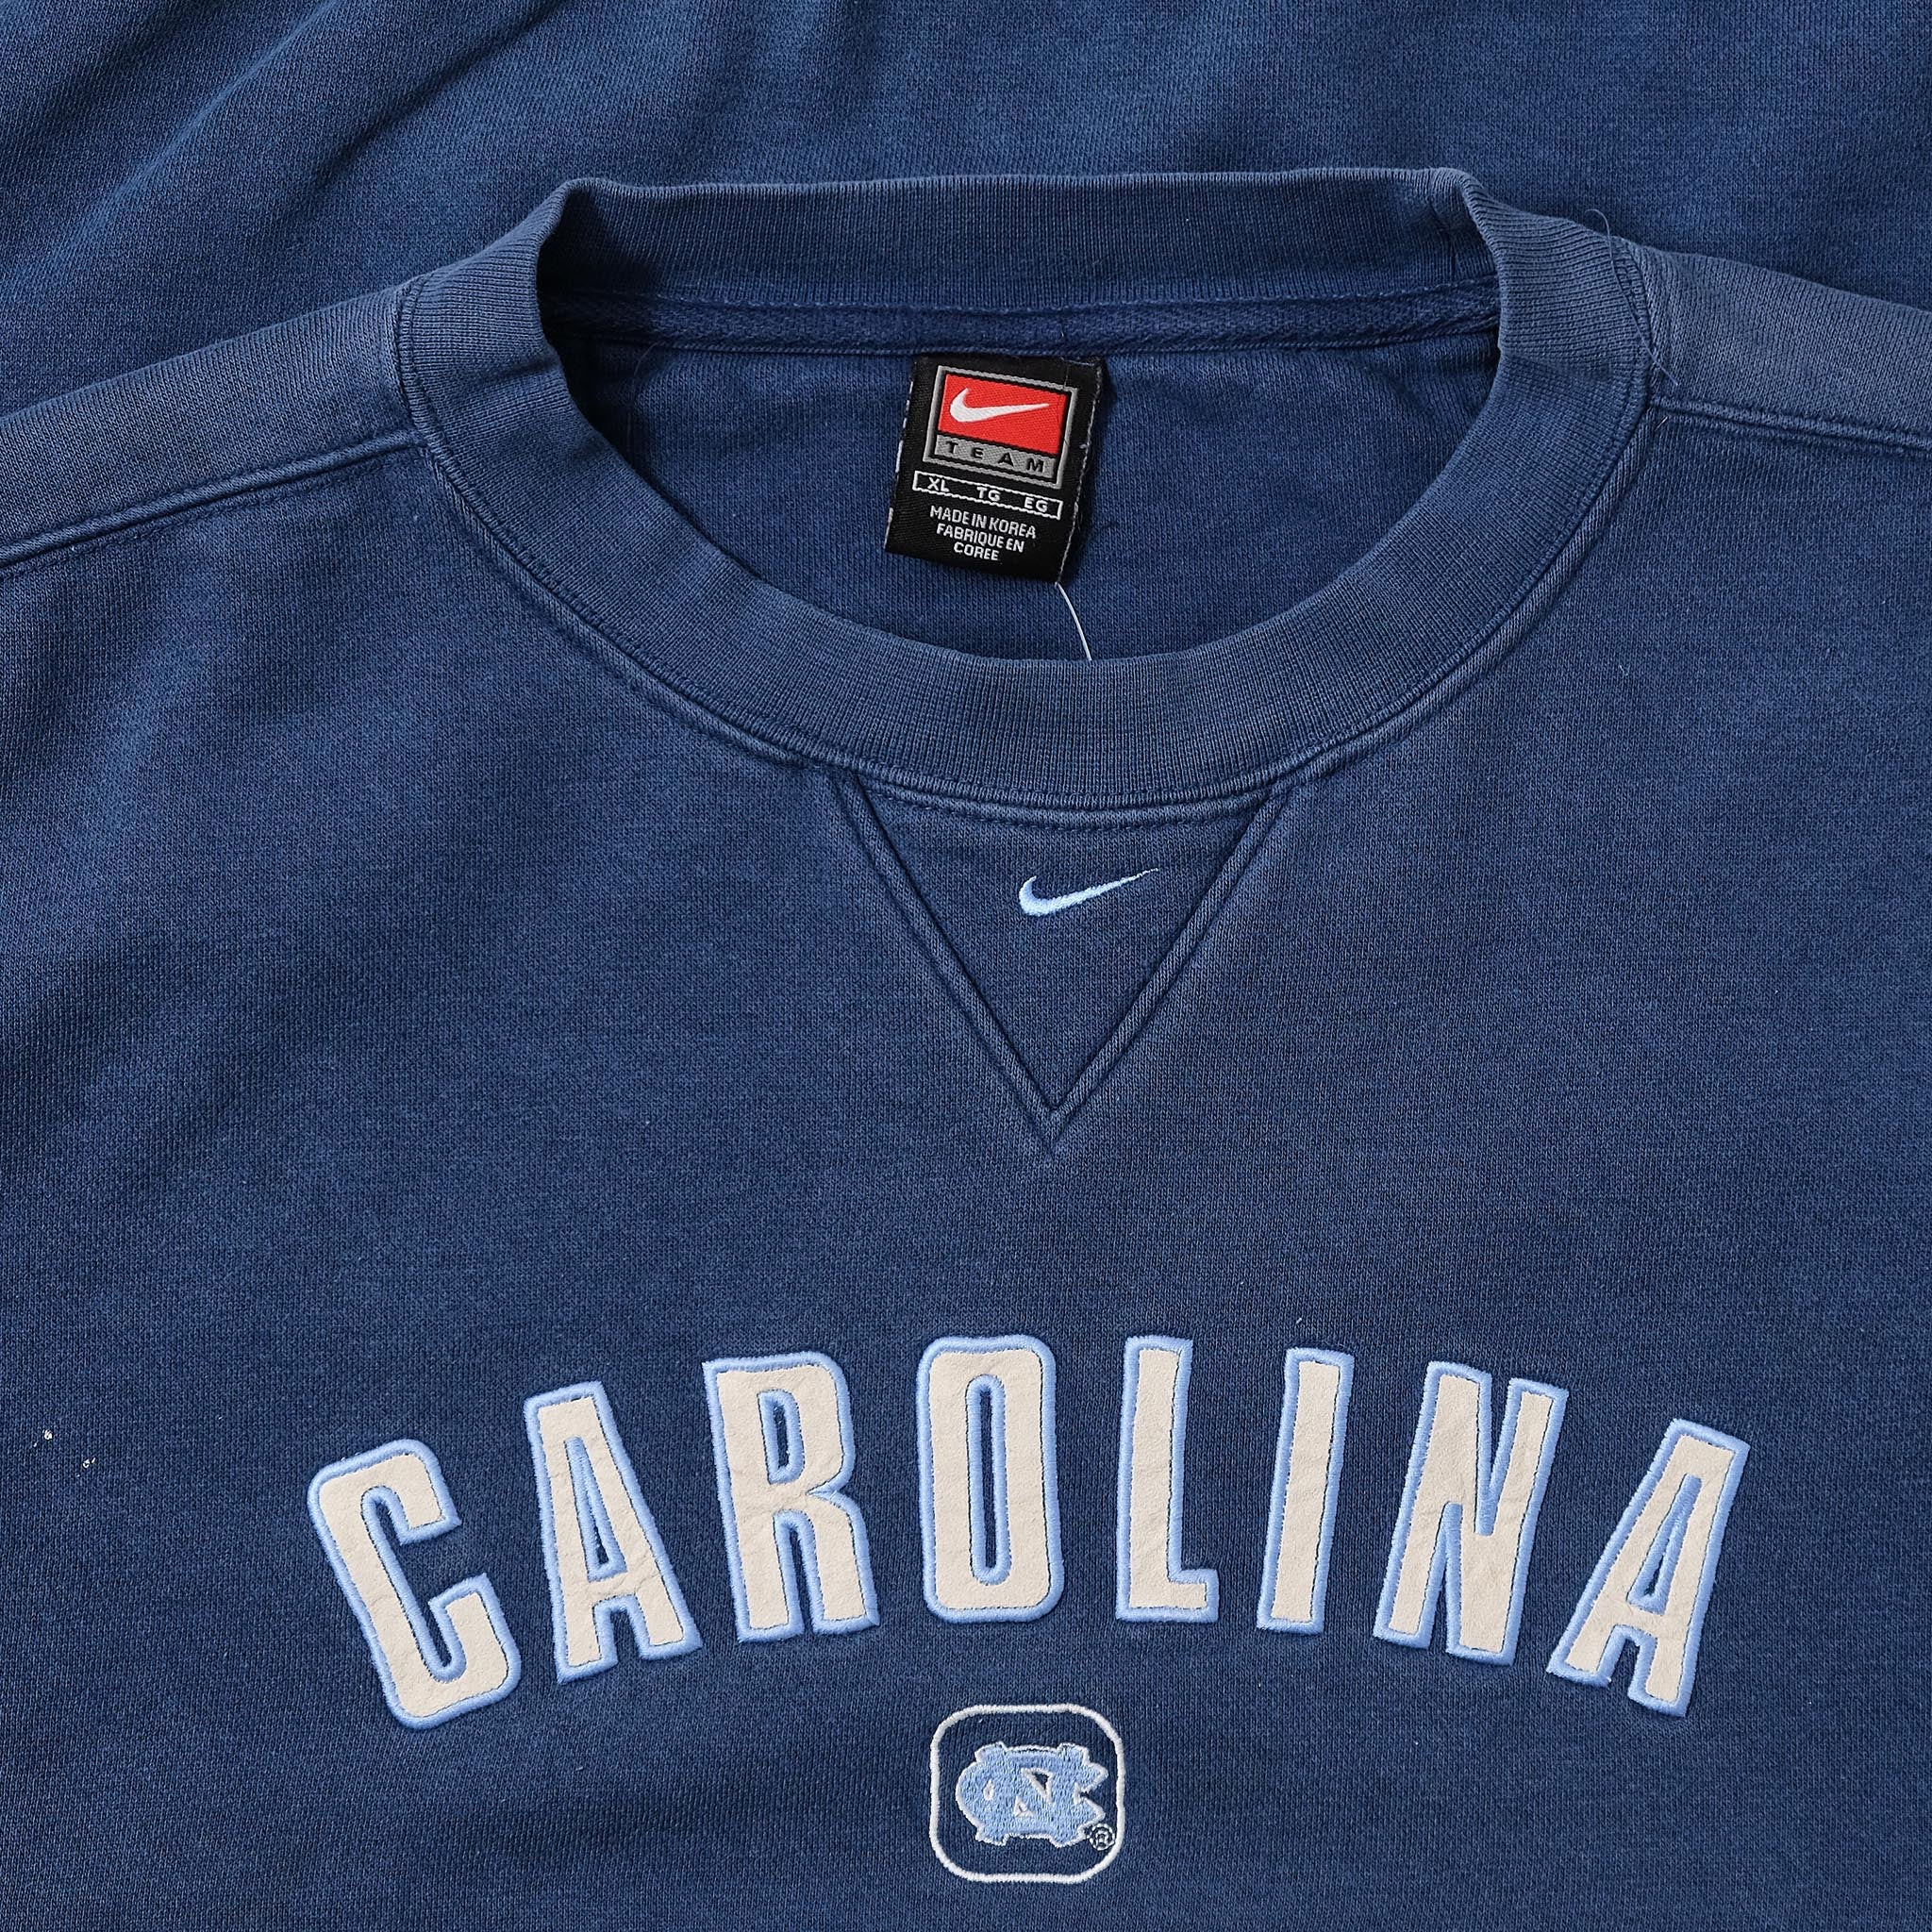 Team Apparel, Shirts, North Carolina Tar Heels Baseball Jersey